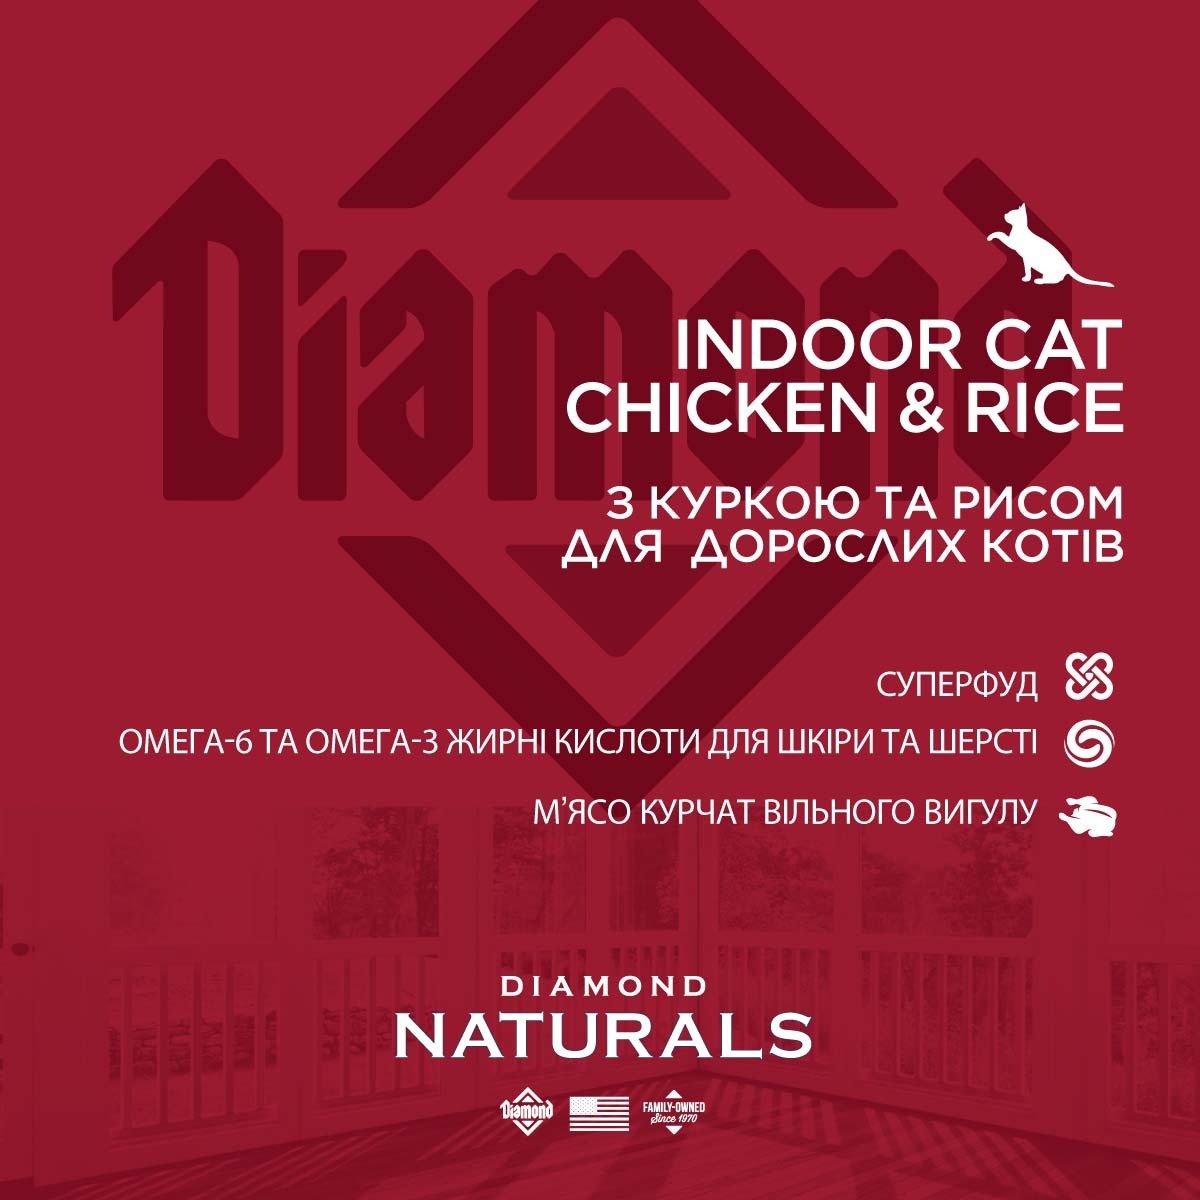 Сухой корм для домашних котов Diamond Naturals Indoor Cat Chicken&Rice 3 кг фото 4